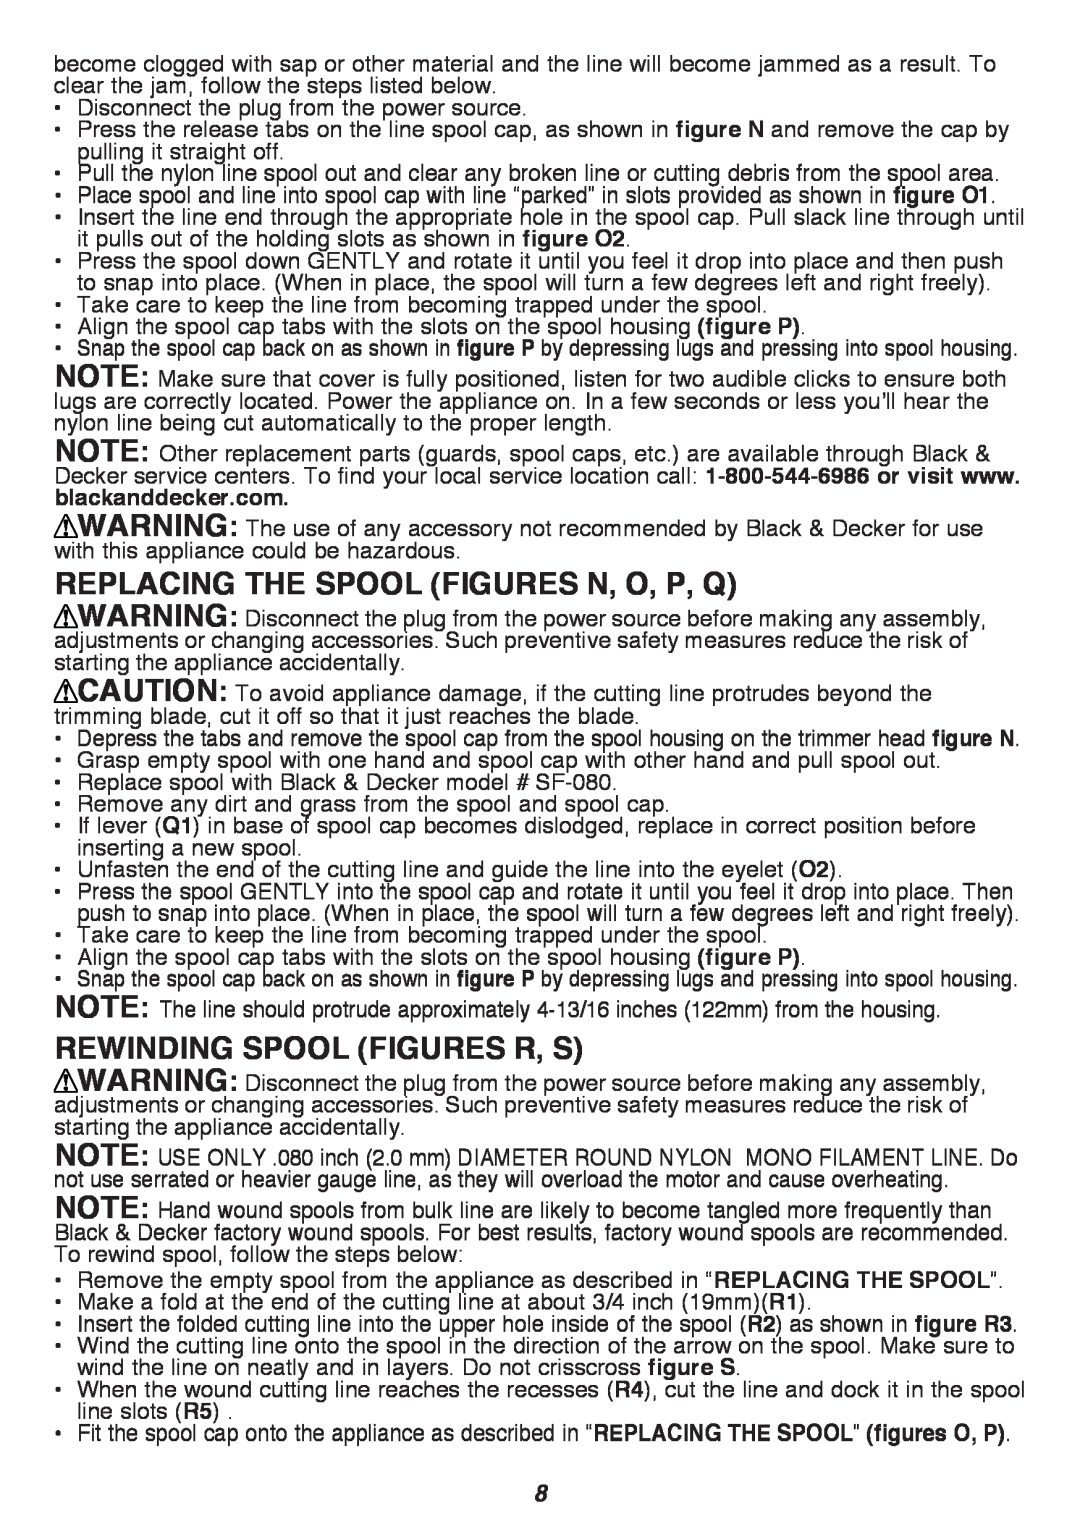 Black & Decker GH3000 instruction manual REPLACING THE SPOOL figures N, O, P, Q, REWINDING SPOOL figures R, S 